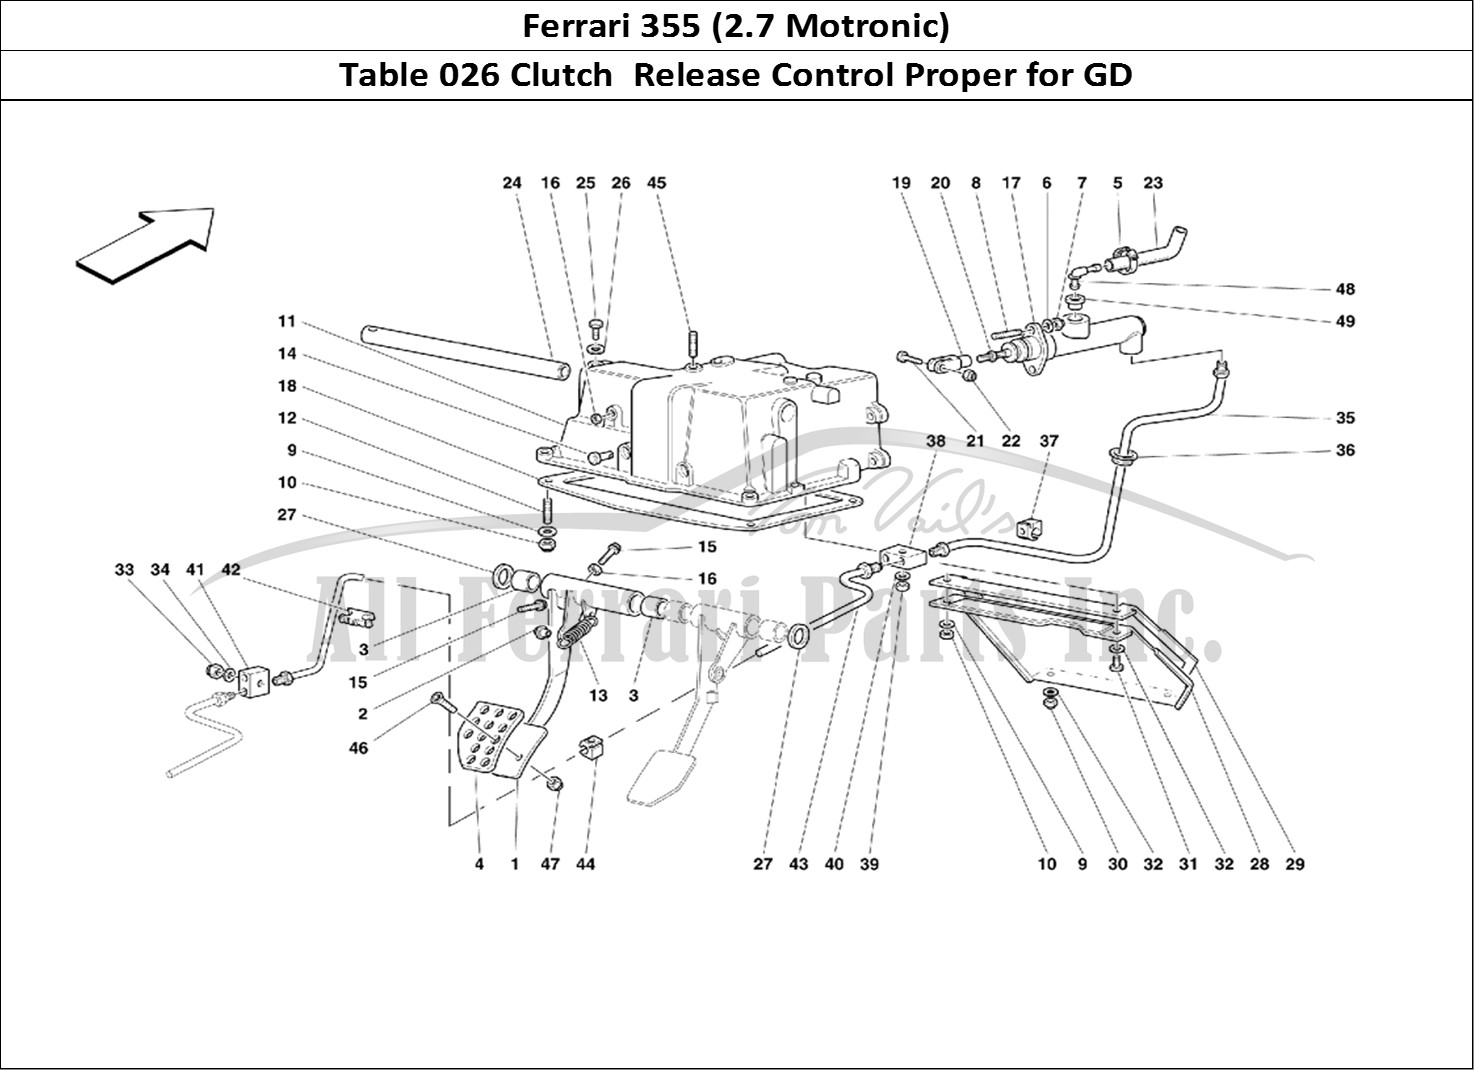 Ferrari Parts Ferrari 355 (2.7 Motronic) Page 026 Clutch Release Control -V